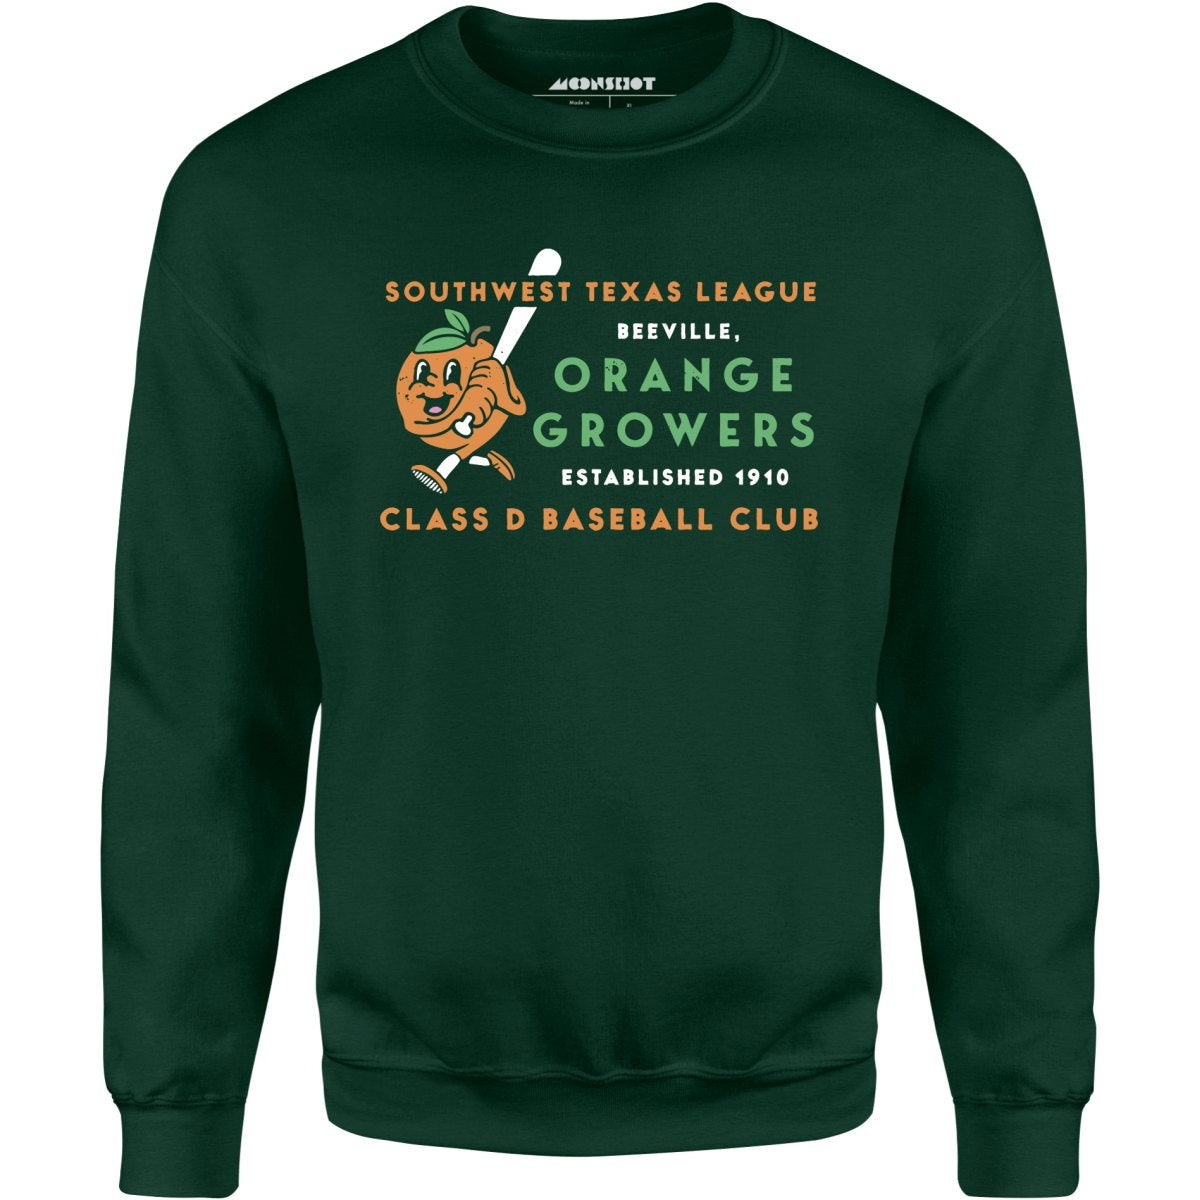 Beeville Orange Growers - Texas - Vintage Defunct Baseball Teams - Unisex Sweatshirt